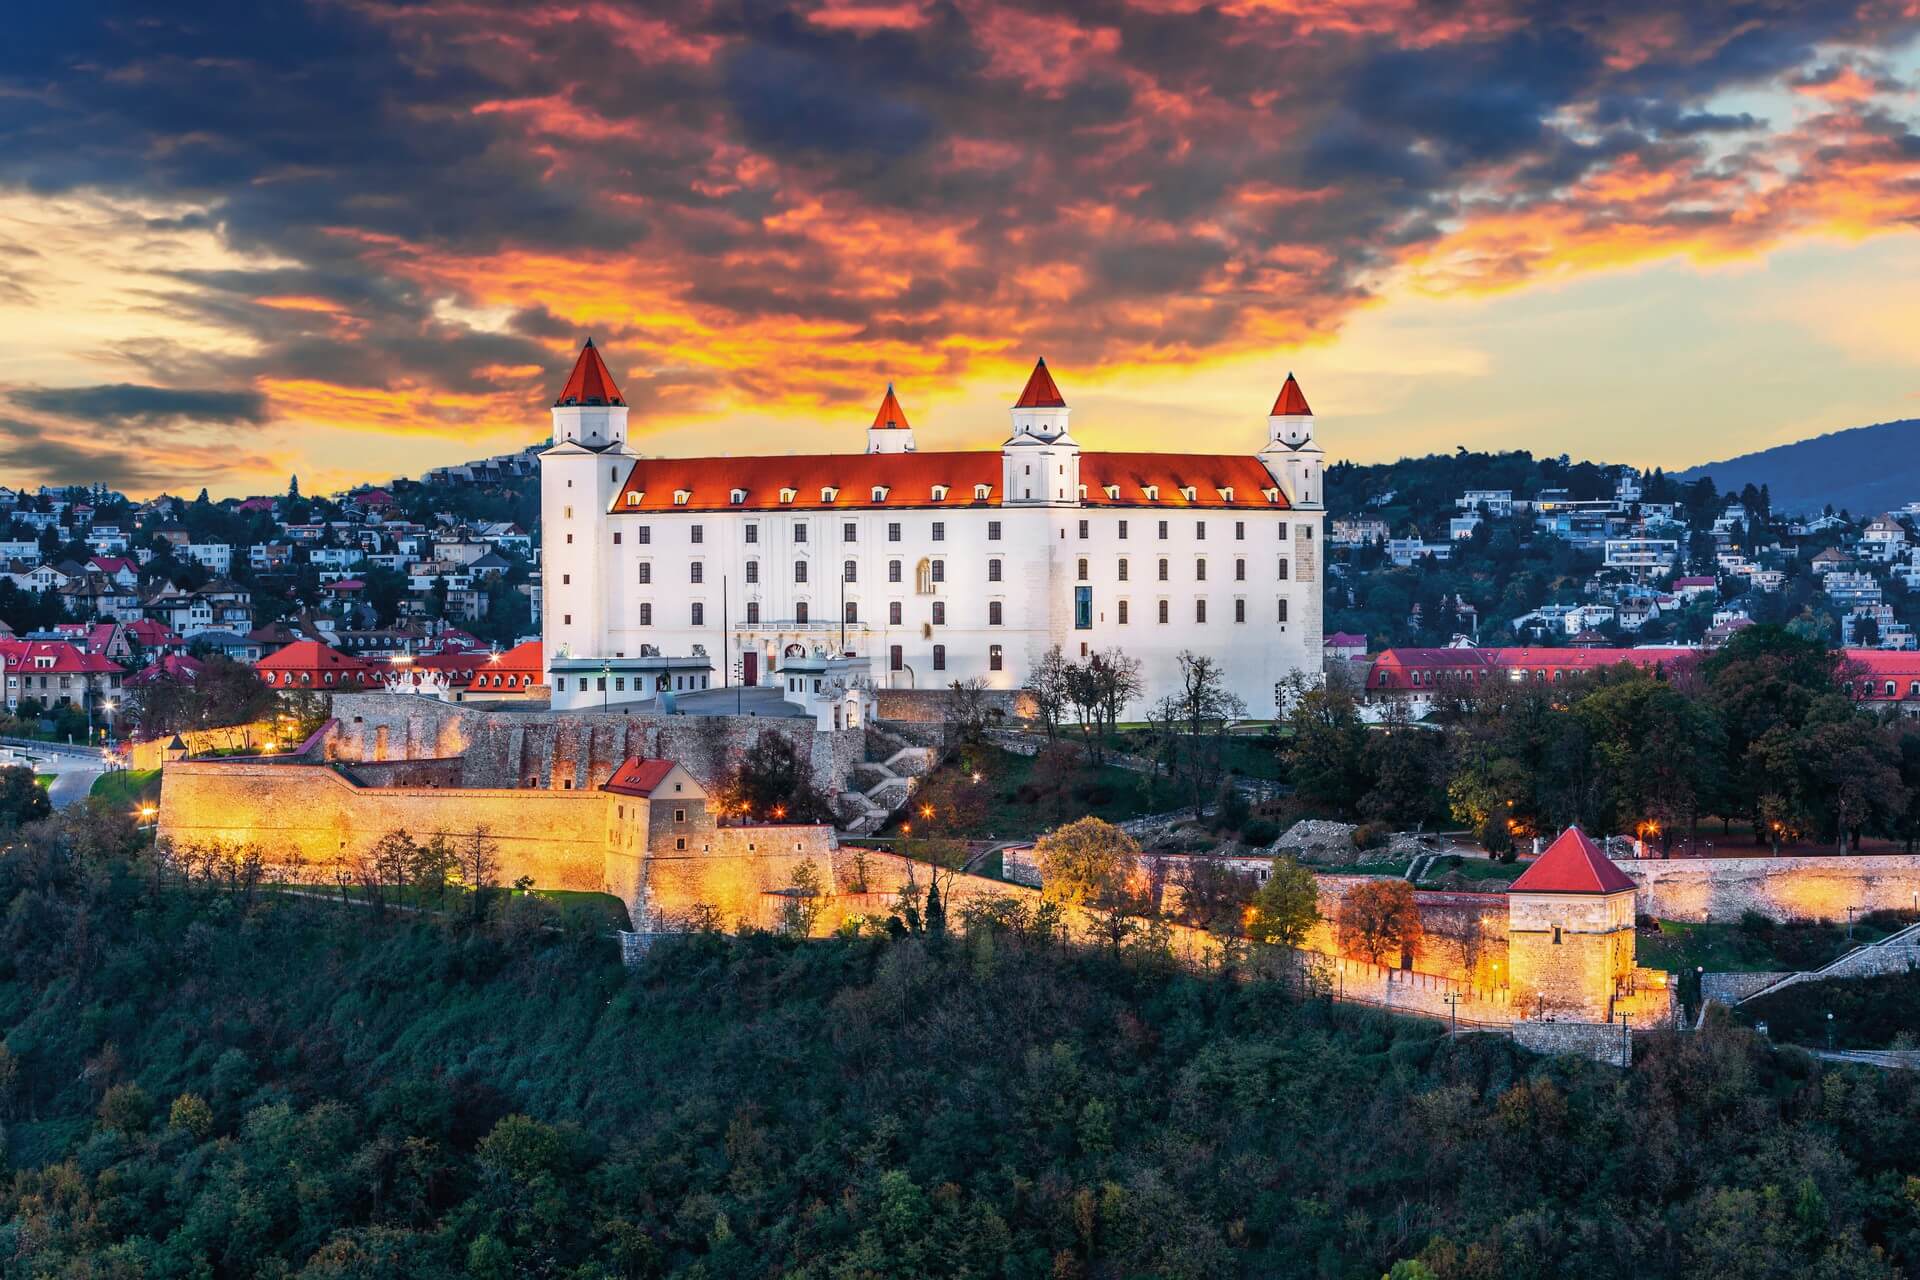 Bratislava castle at sunset, Bratislava, Slovakia
